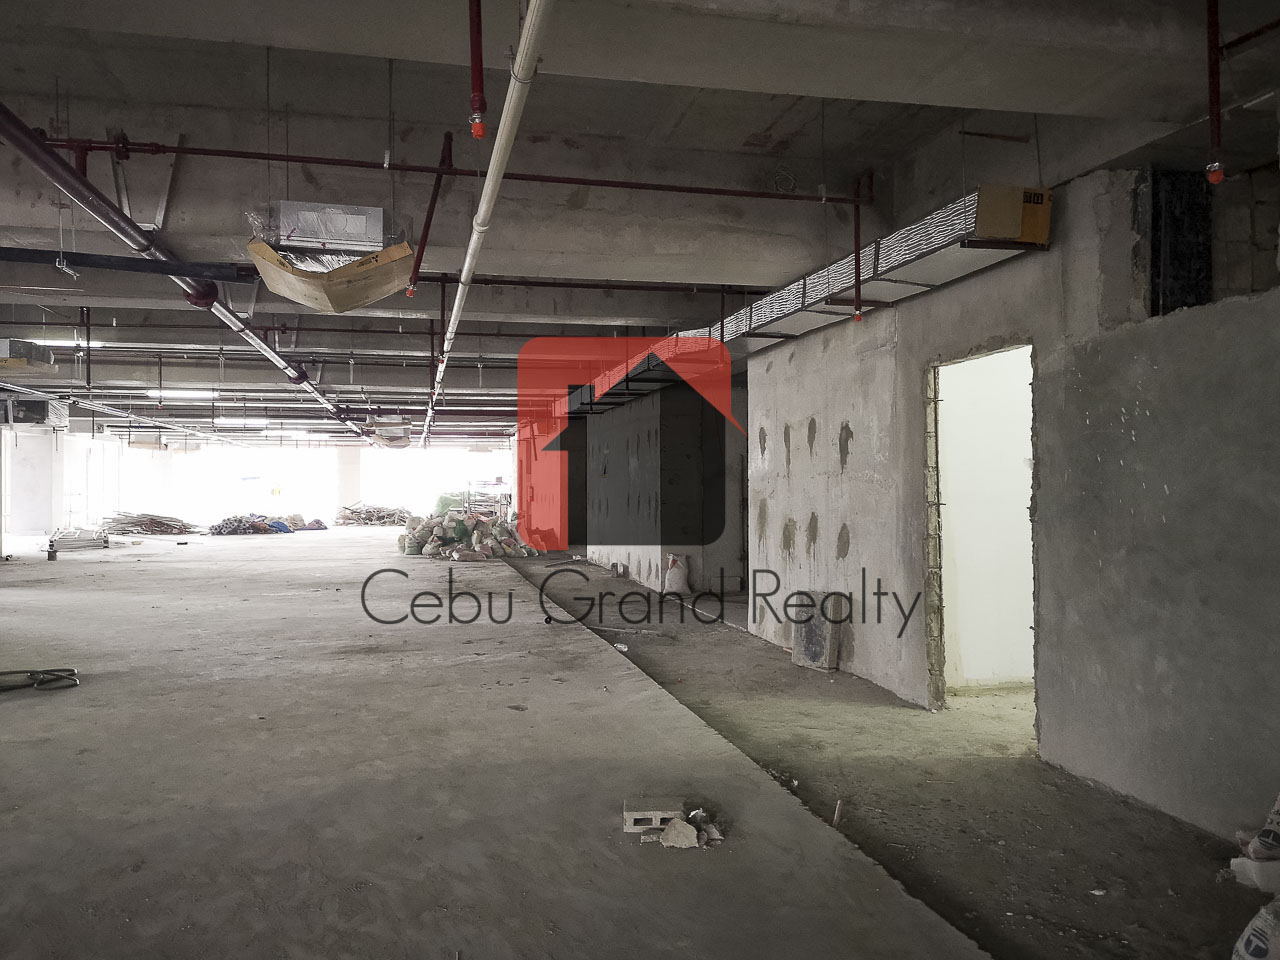 RCP180 Premium Office Space for Rent in Cebu Business Park Cebu